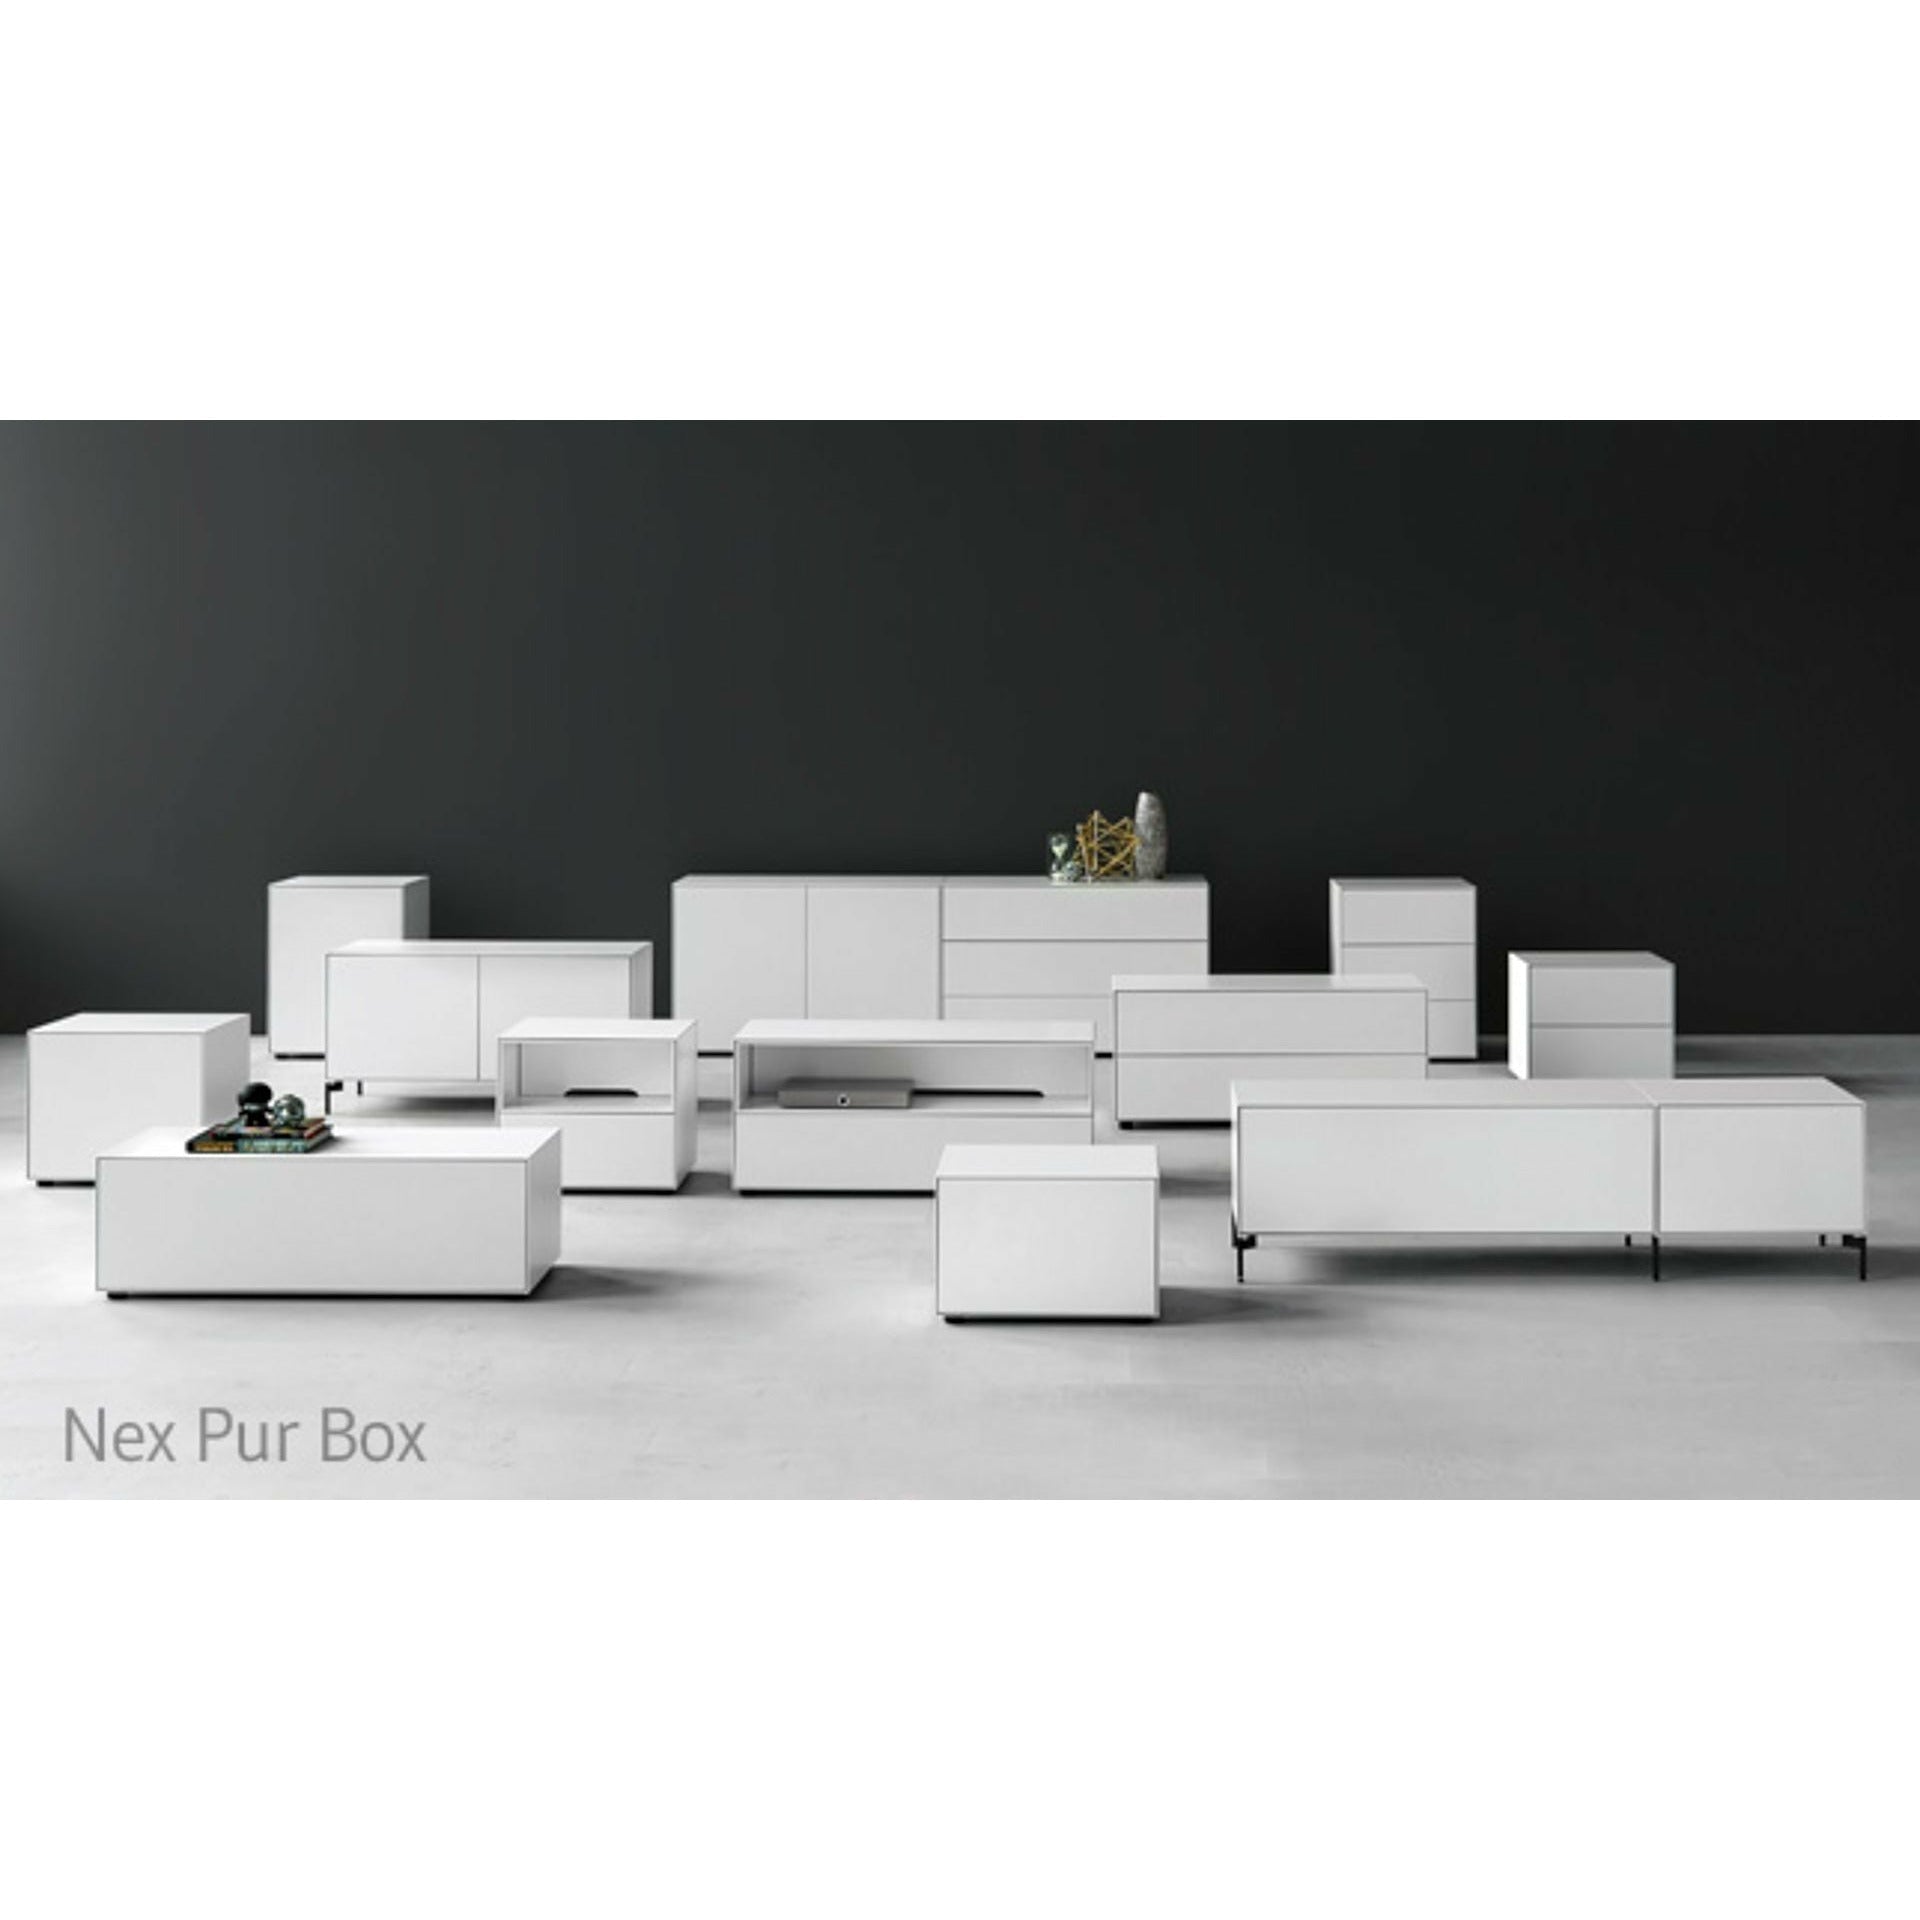 Piure Nex Pur Box Door Hx W 75x180 Cm, 1 Shelf